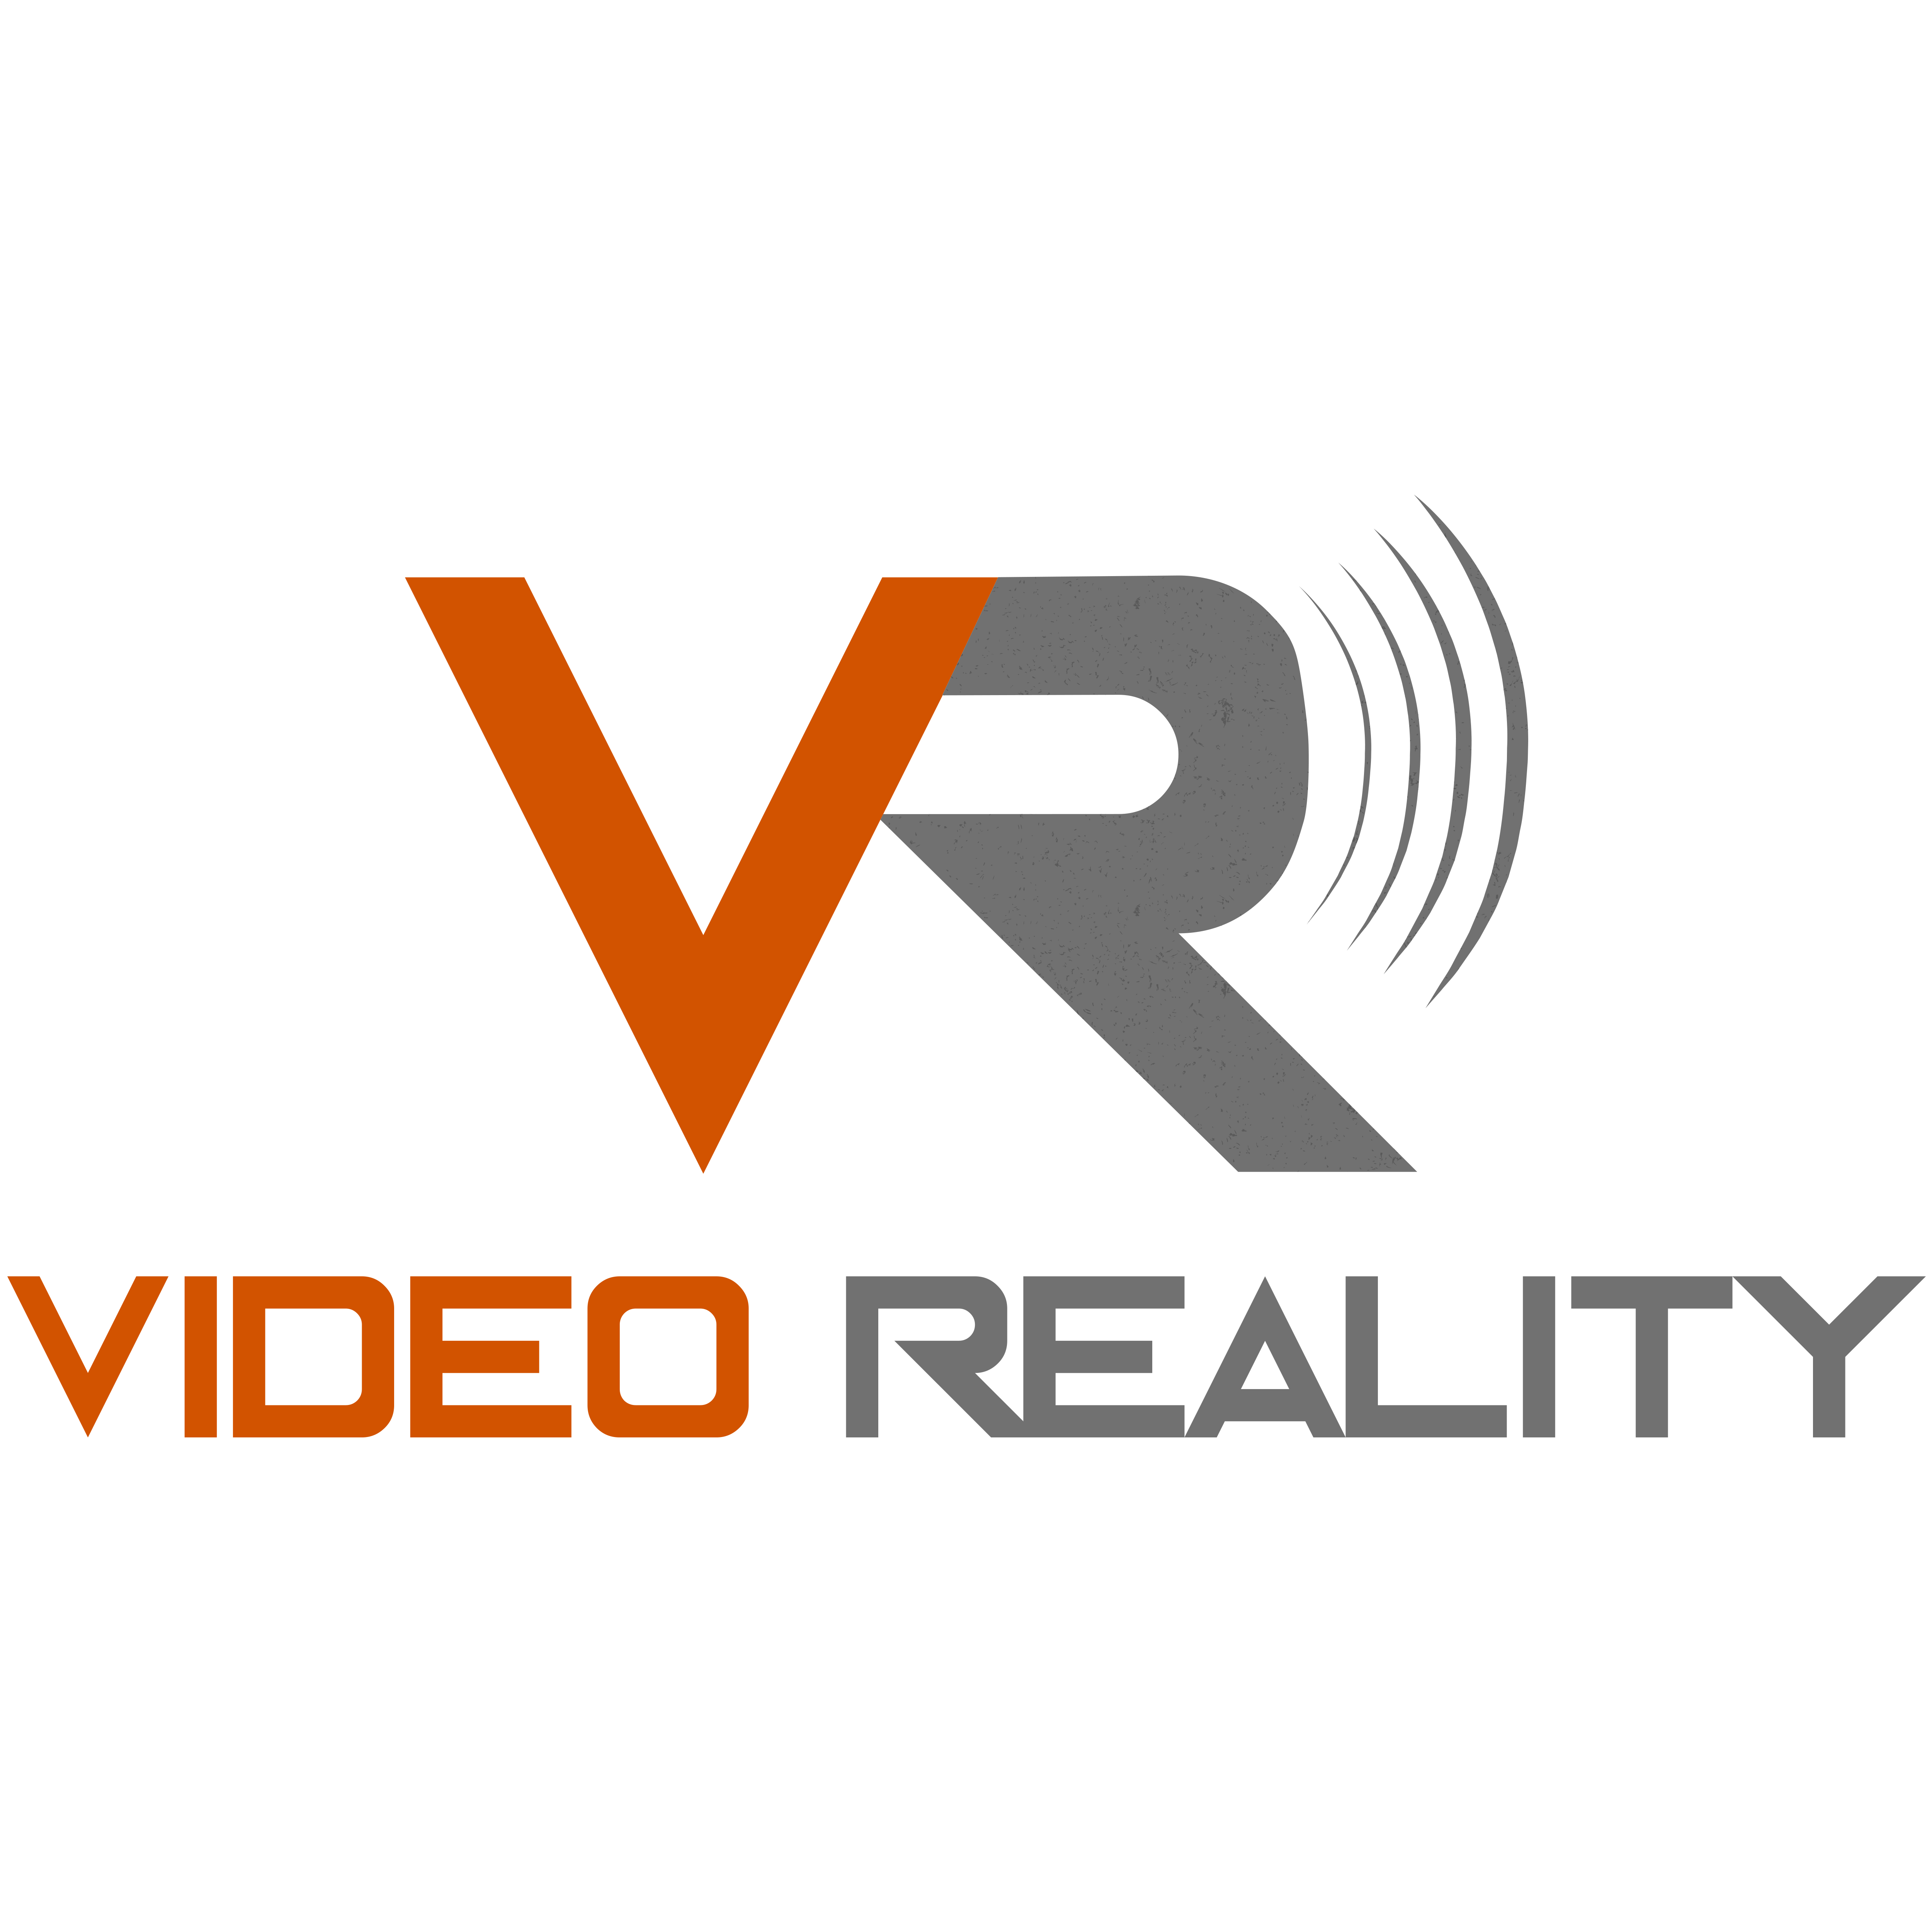 Video Reality